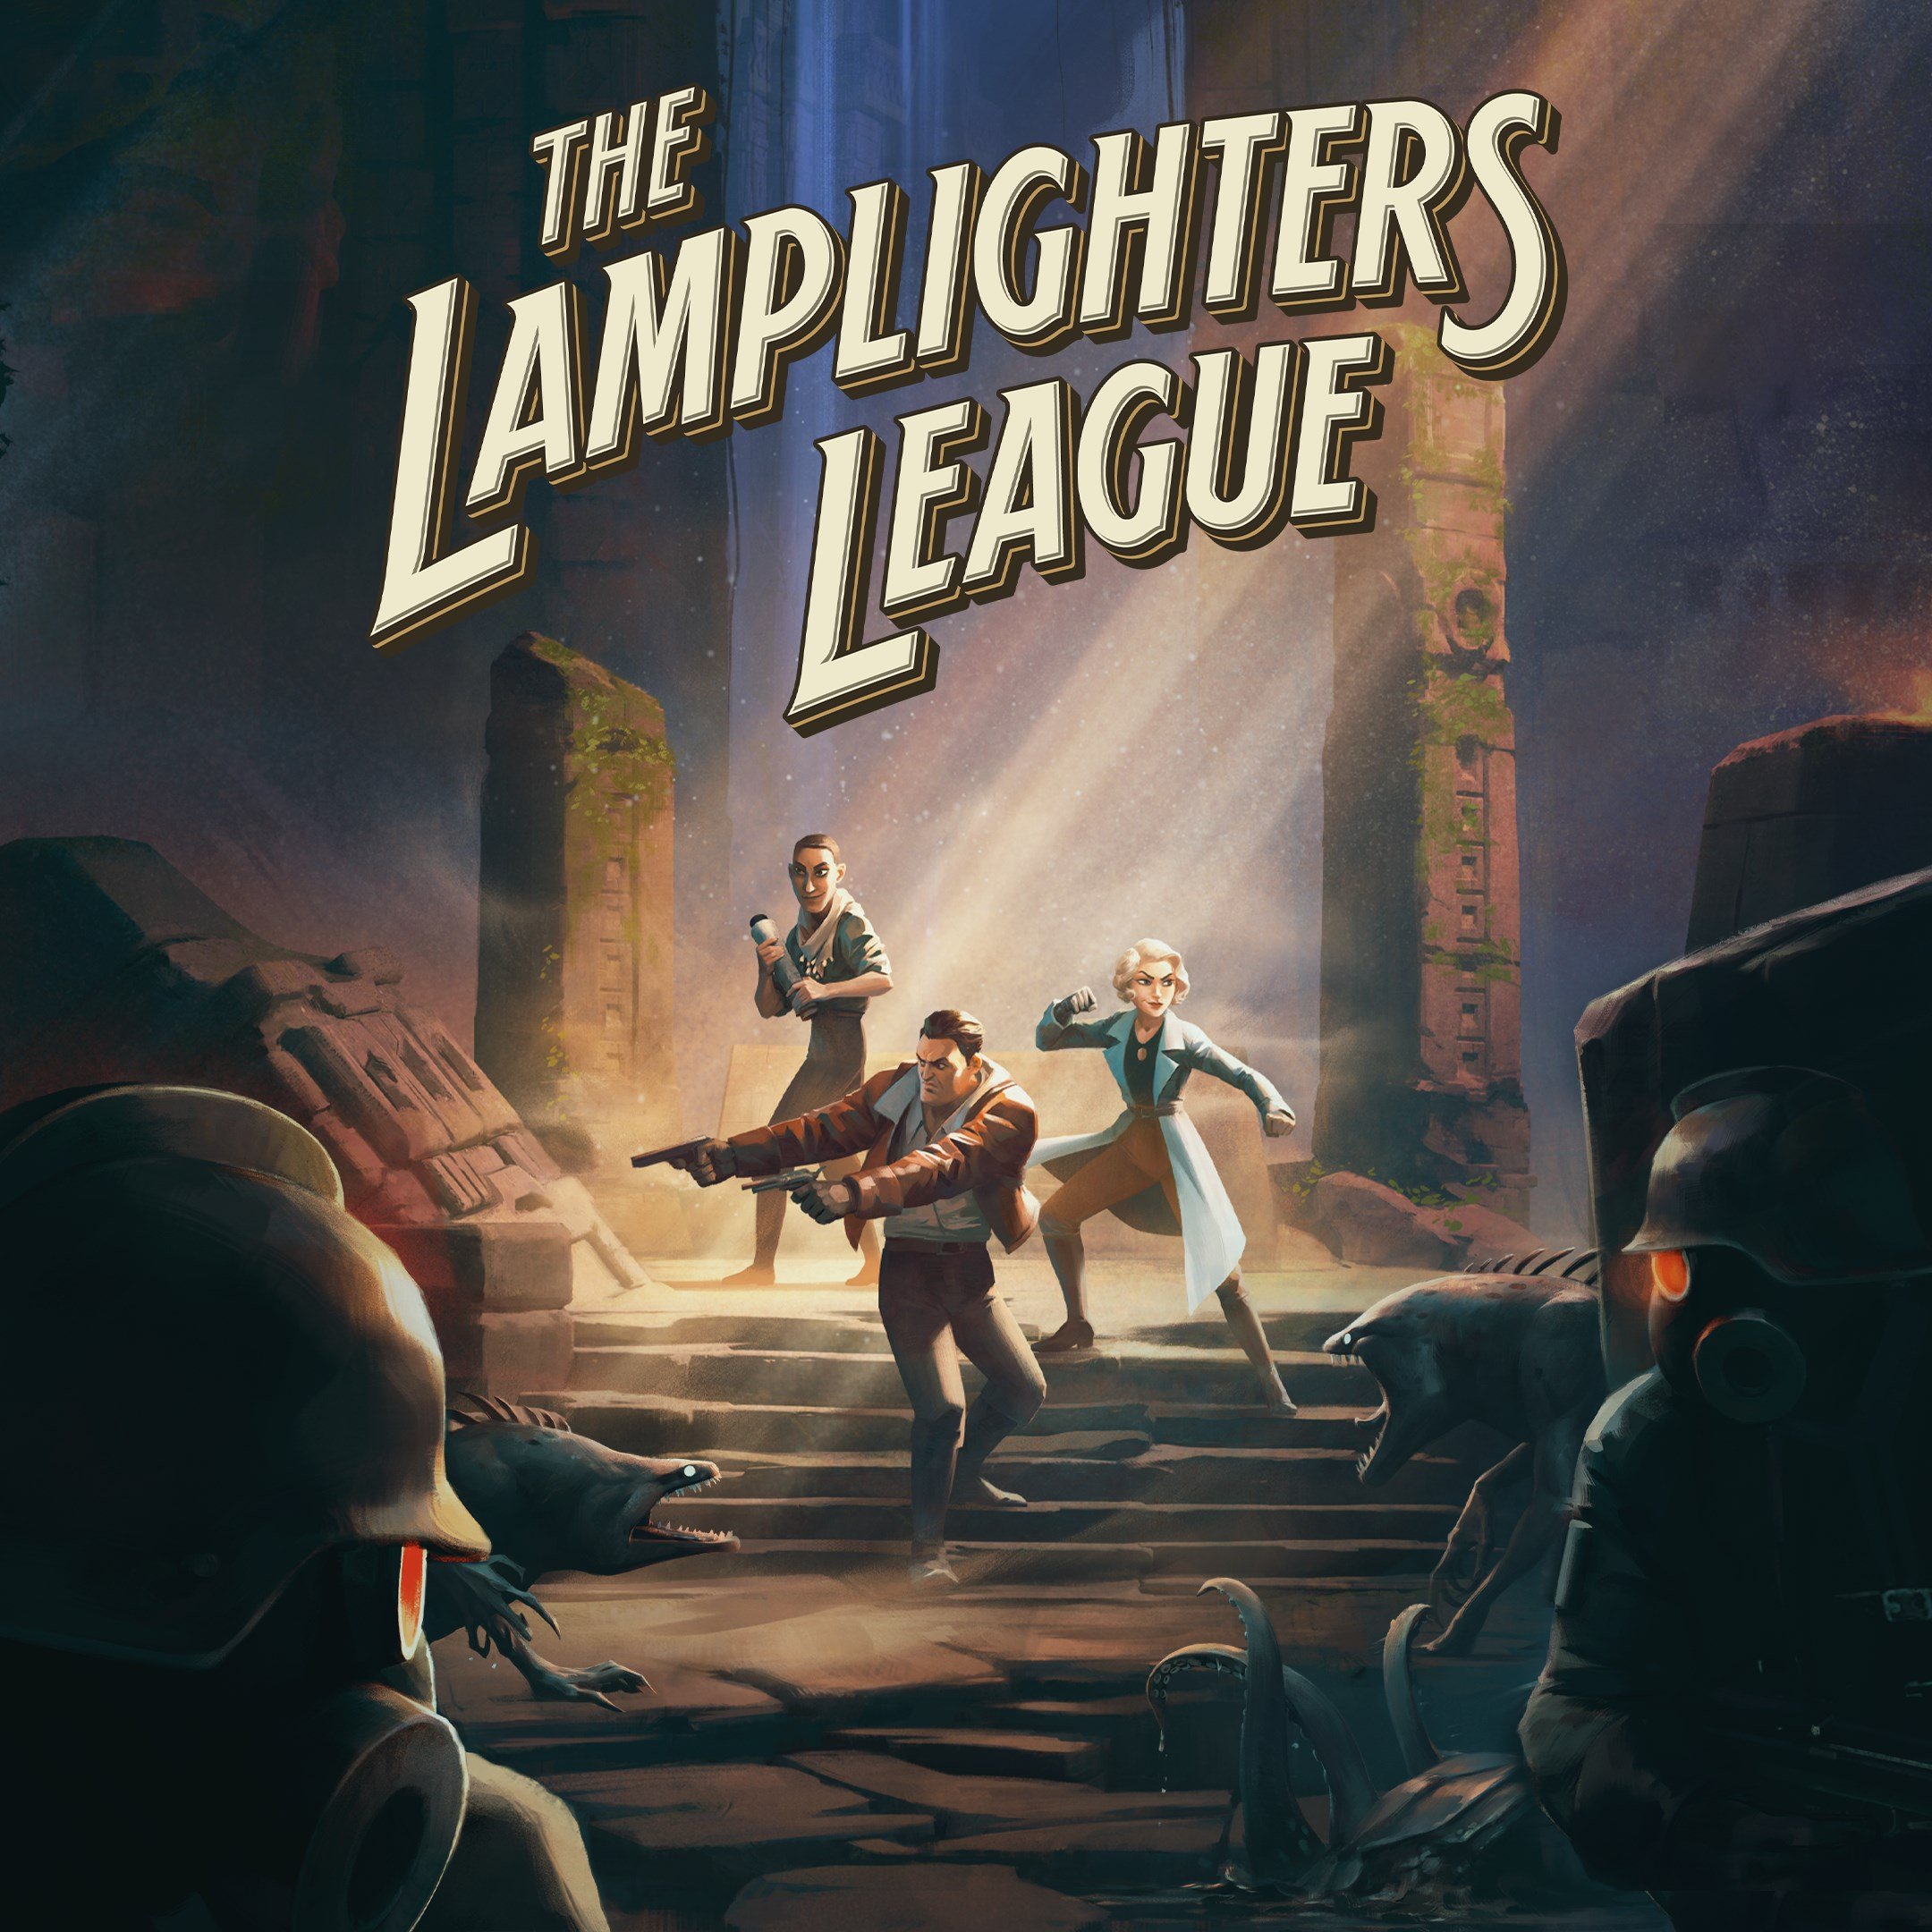 The Lamplighters\' League